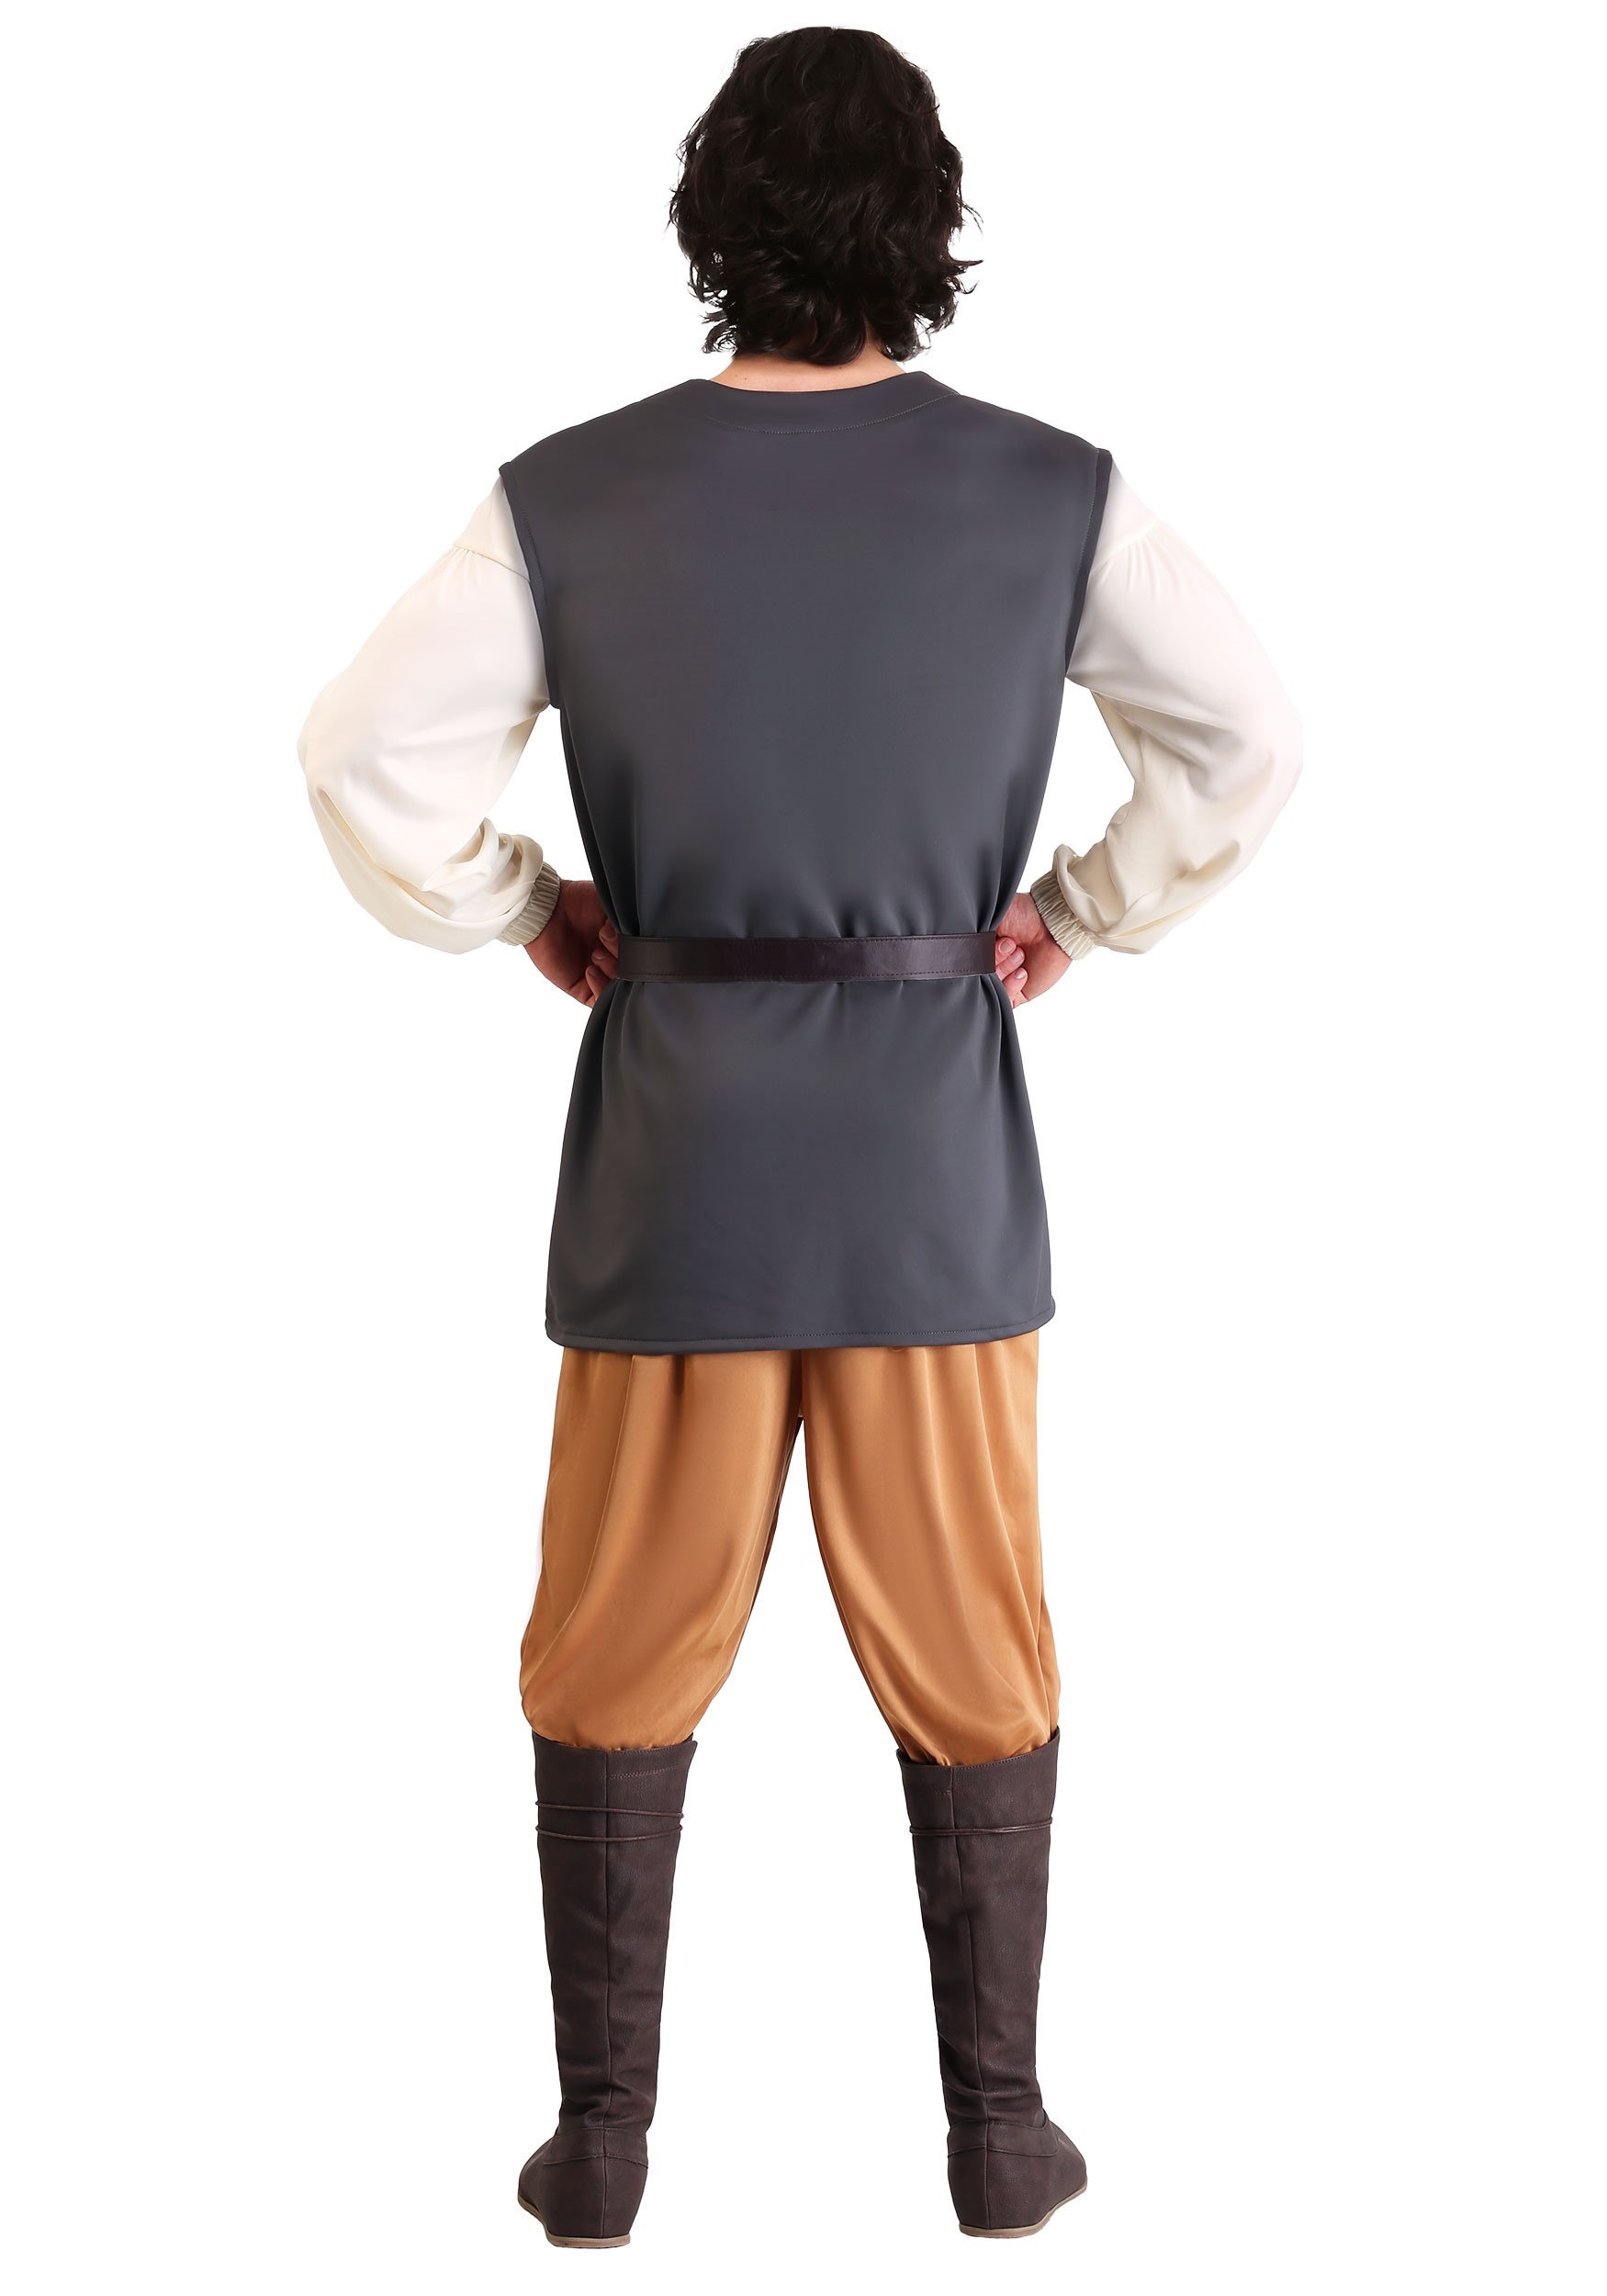 Merry Medieval Fancy Dress Costume For Men